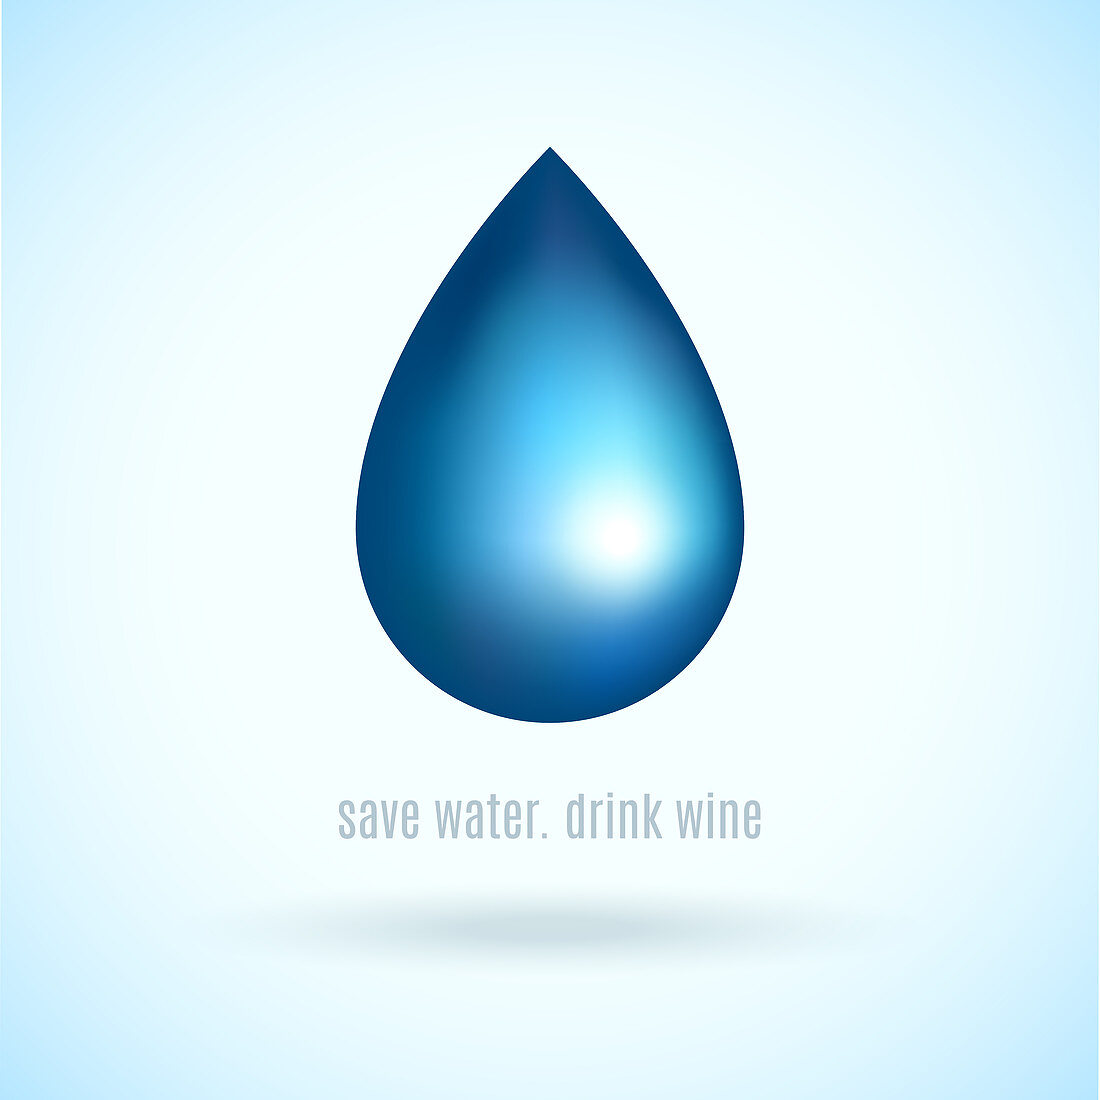 Save water, illustration